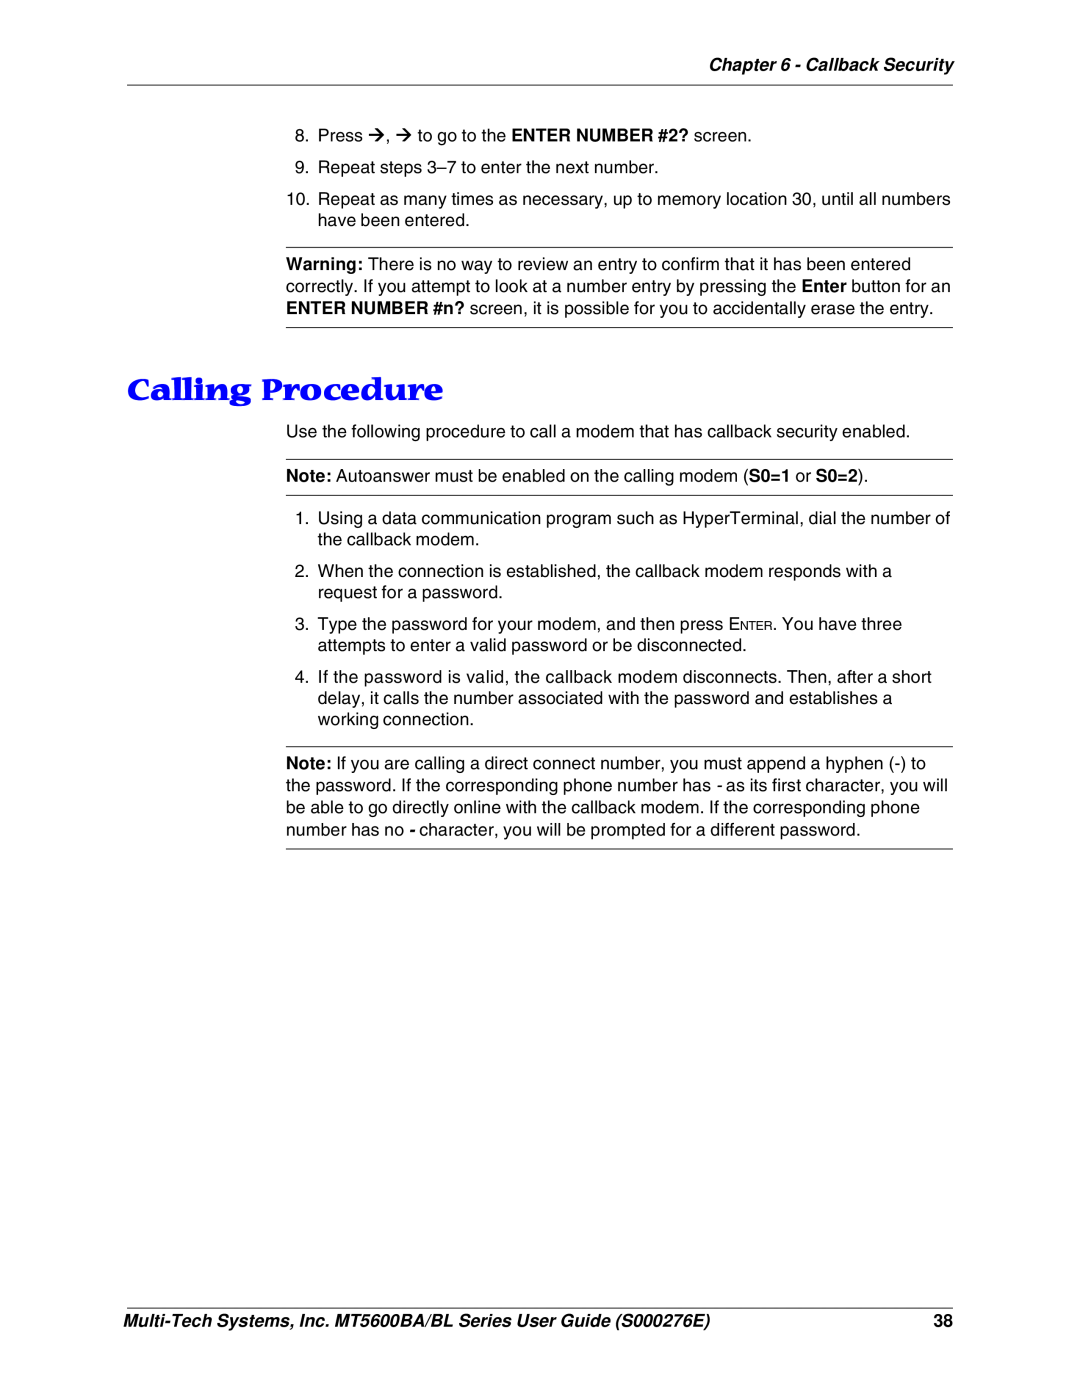 Multitech MT5600BL, MT5600BA manual Calling Procedure 